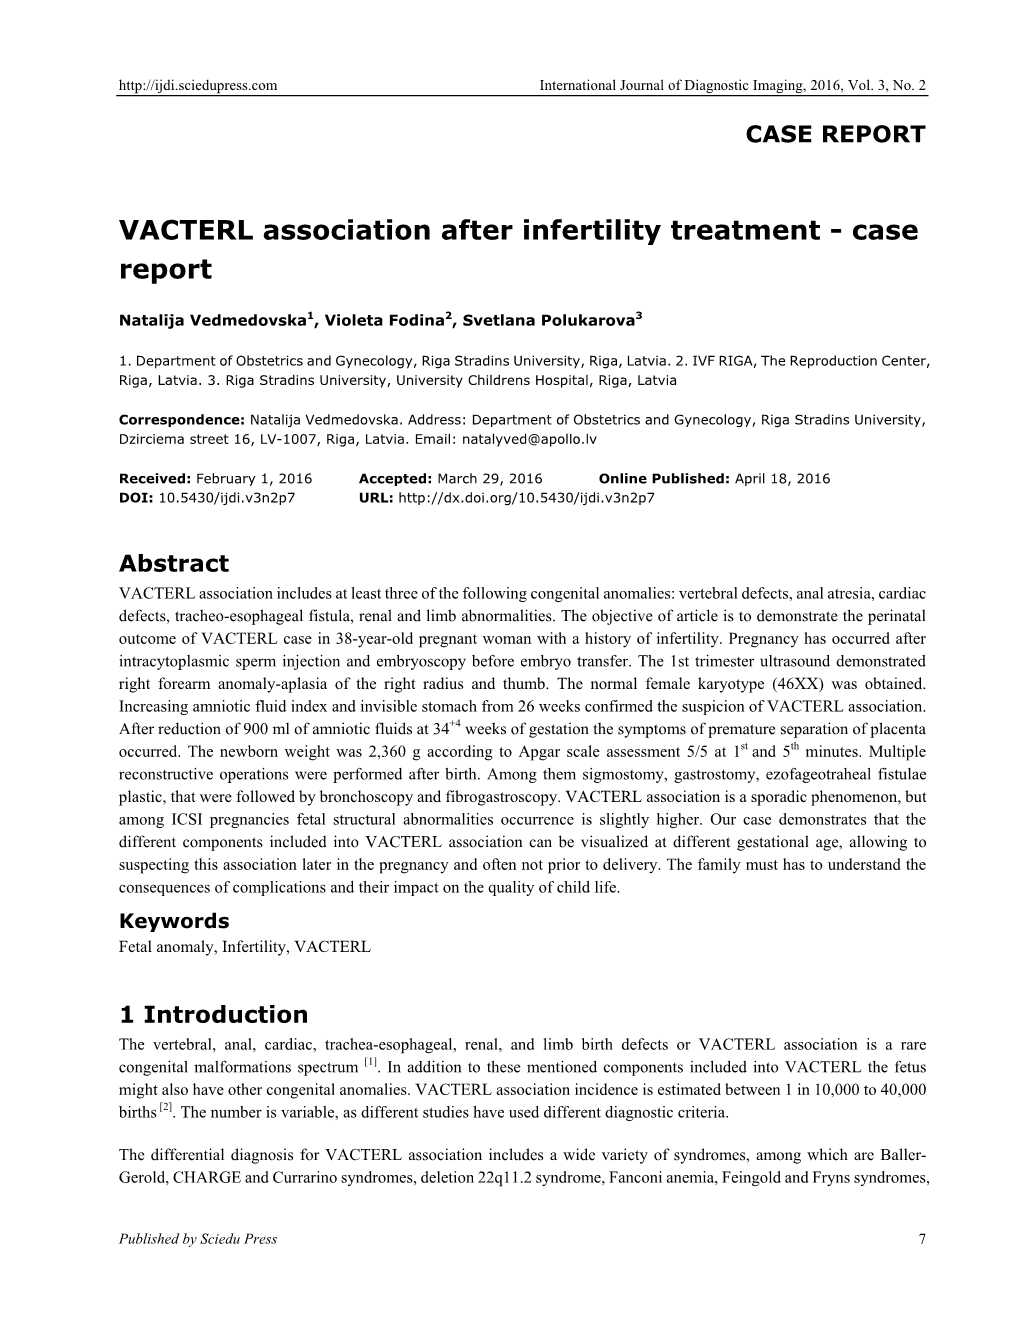 VACTERL Association After Infertility Treatment - Case Report